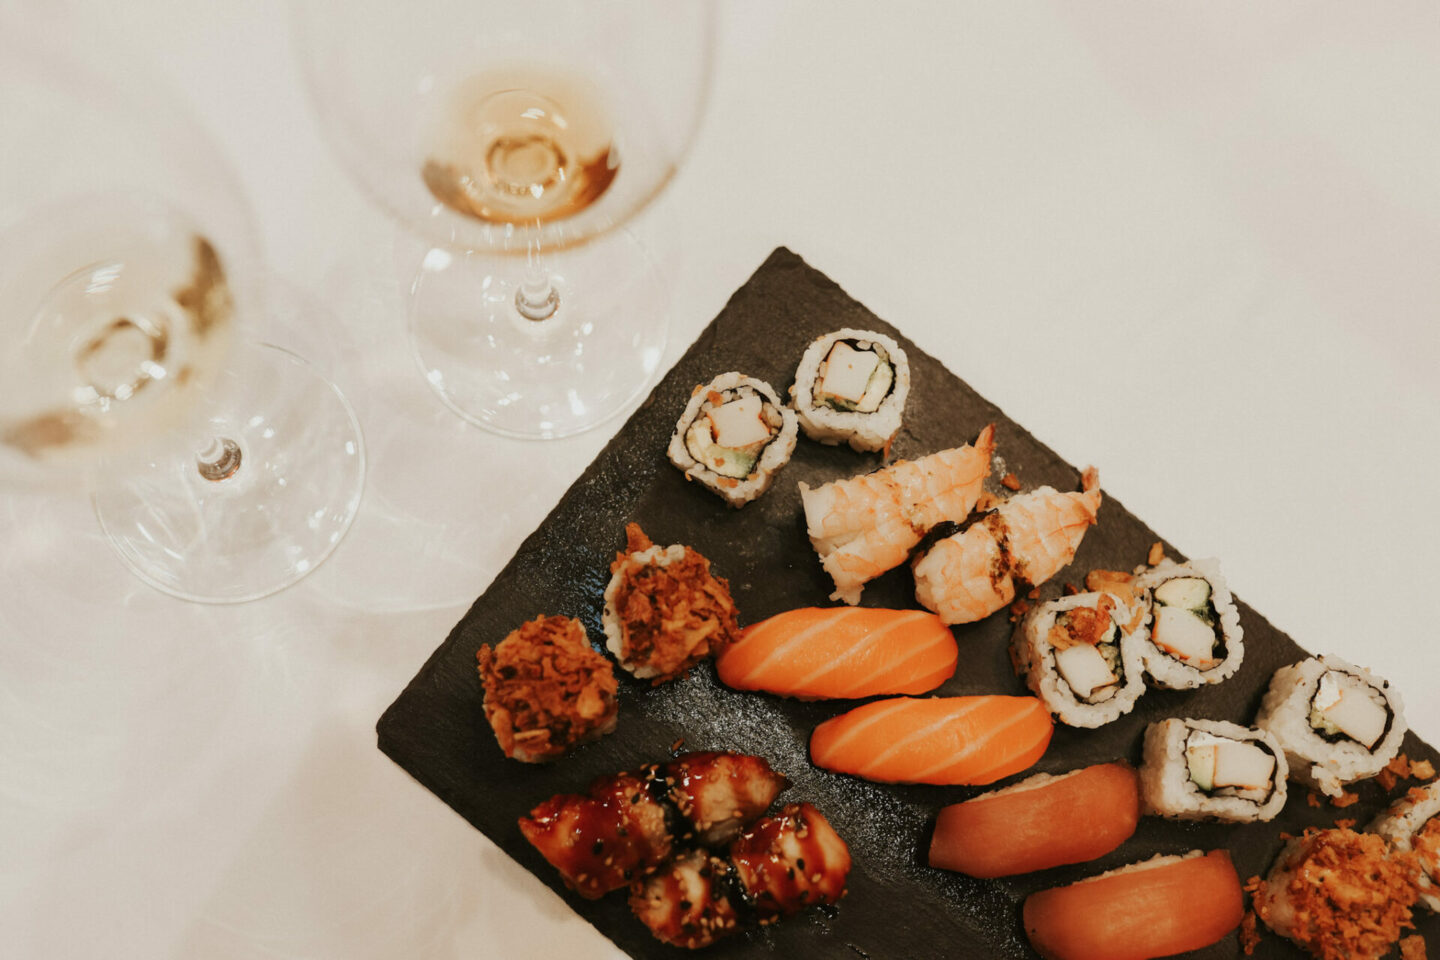 Bodegas de Alberto rueda wine with sushi